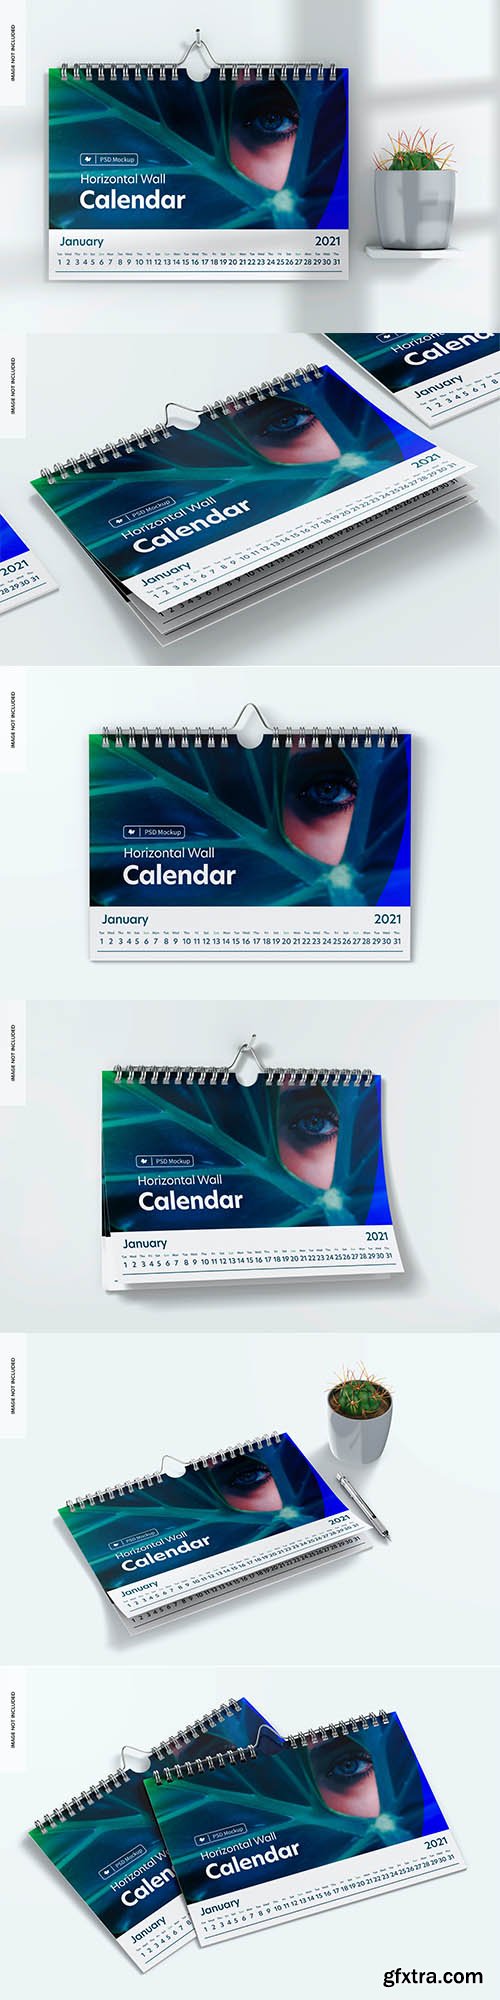 Horizontal wall calendar mockup